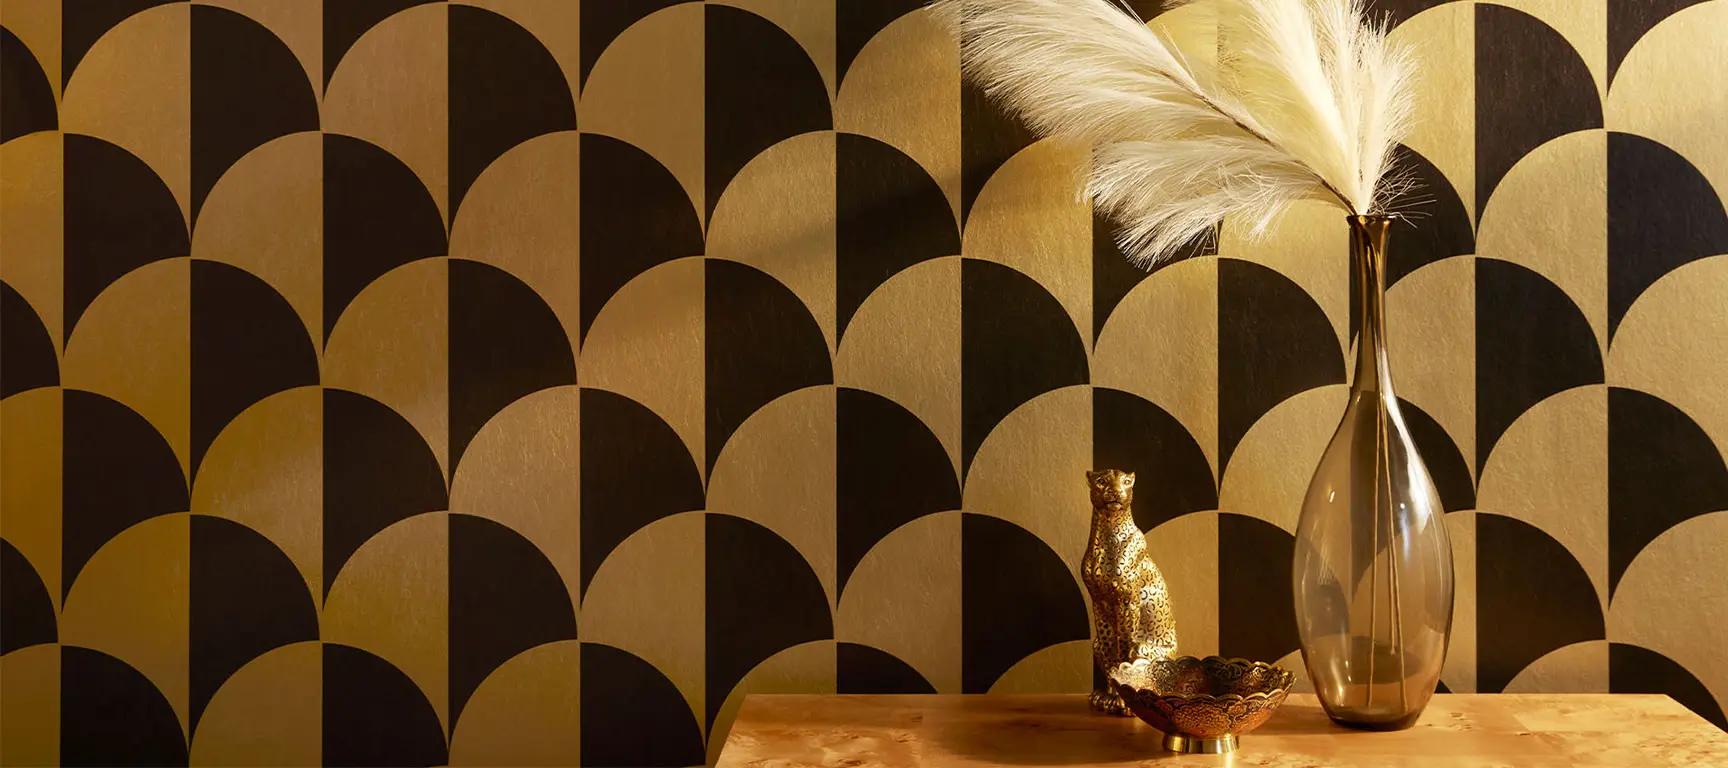 Art deco style black and gold metallic wallpaper.